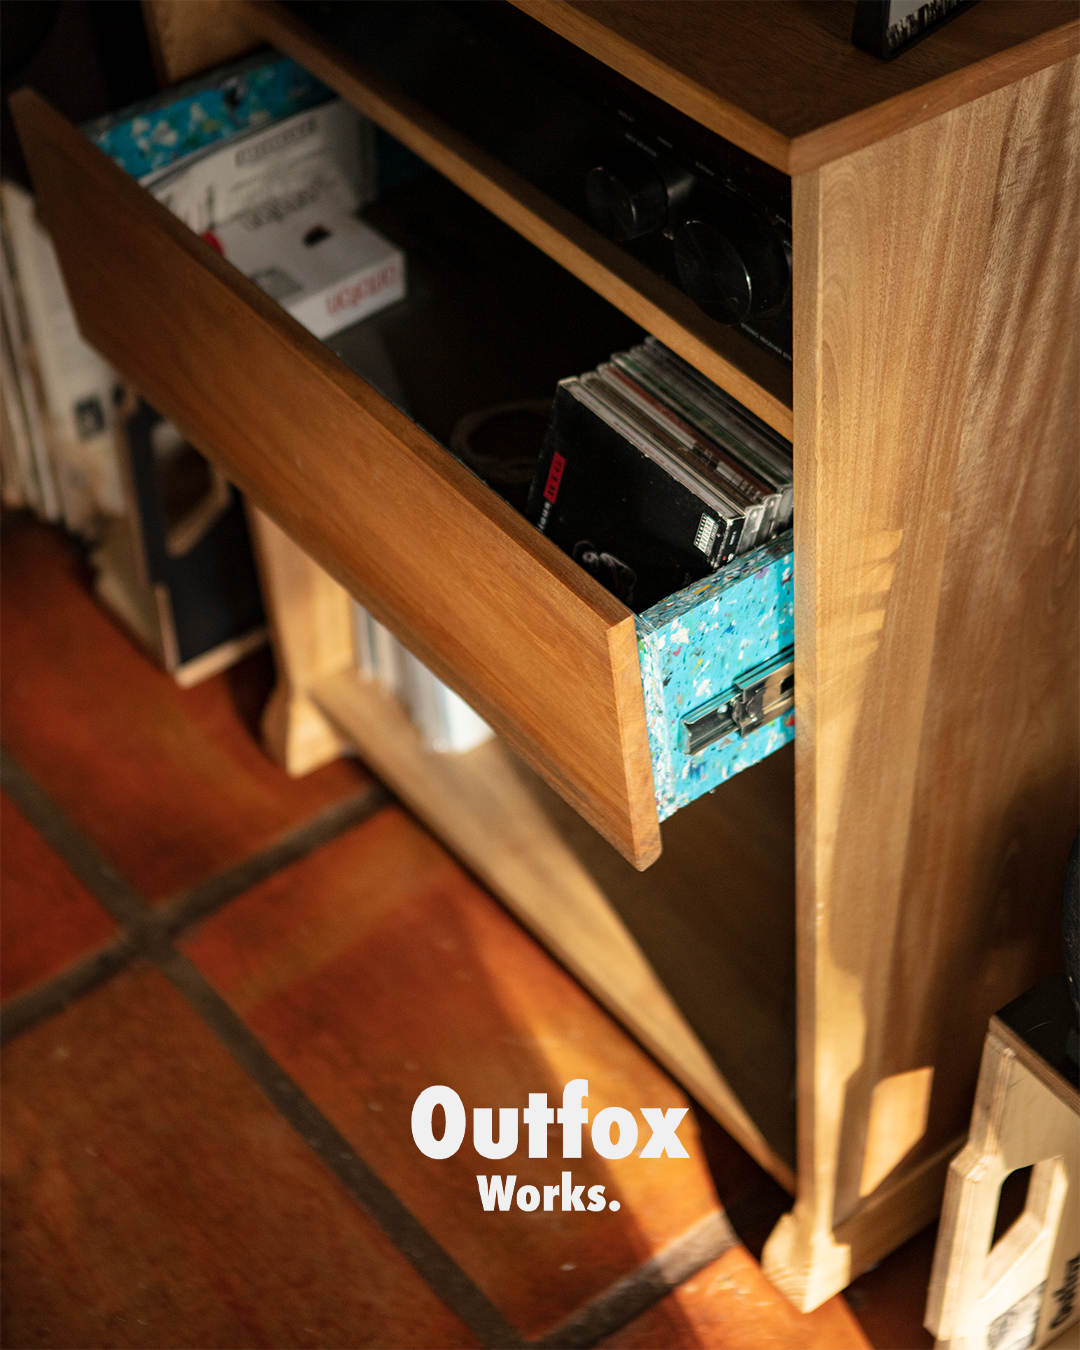 Compra Mueble para Tornamesa y Vinilos armable Axolote Outfox Works –  Outfox Works.